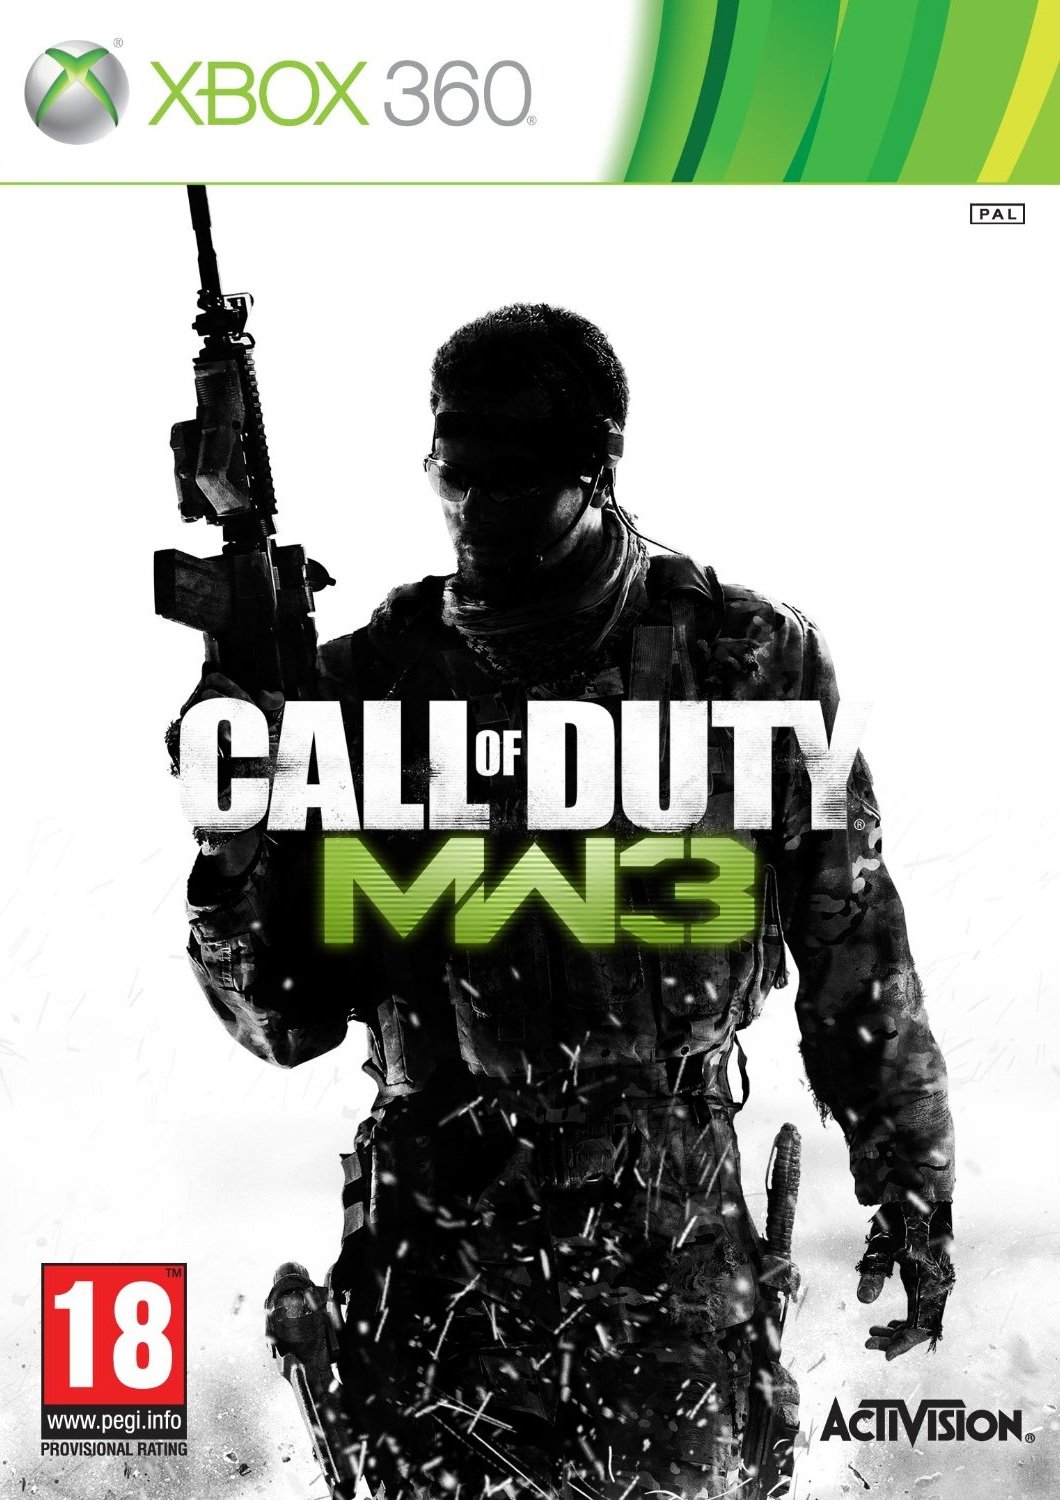 Comparaison Call of Duty Modern Warfare 3 Xbox et... Wii !